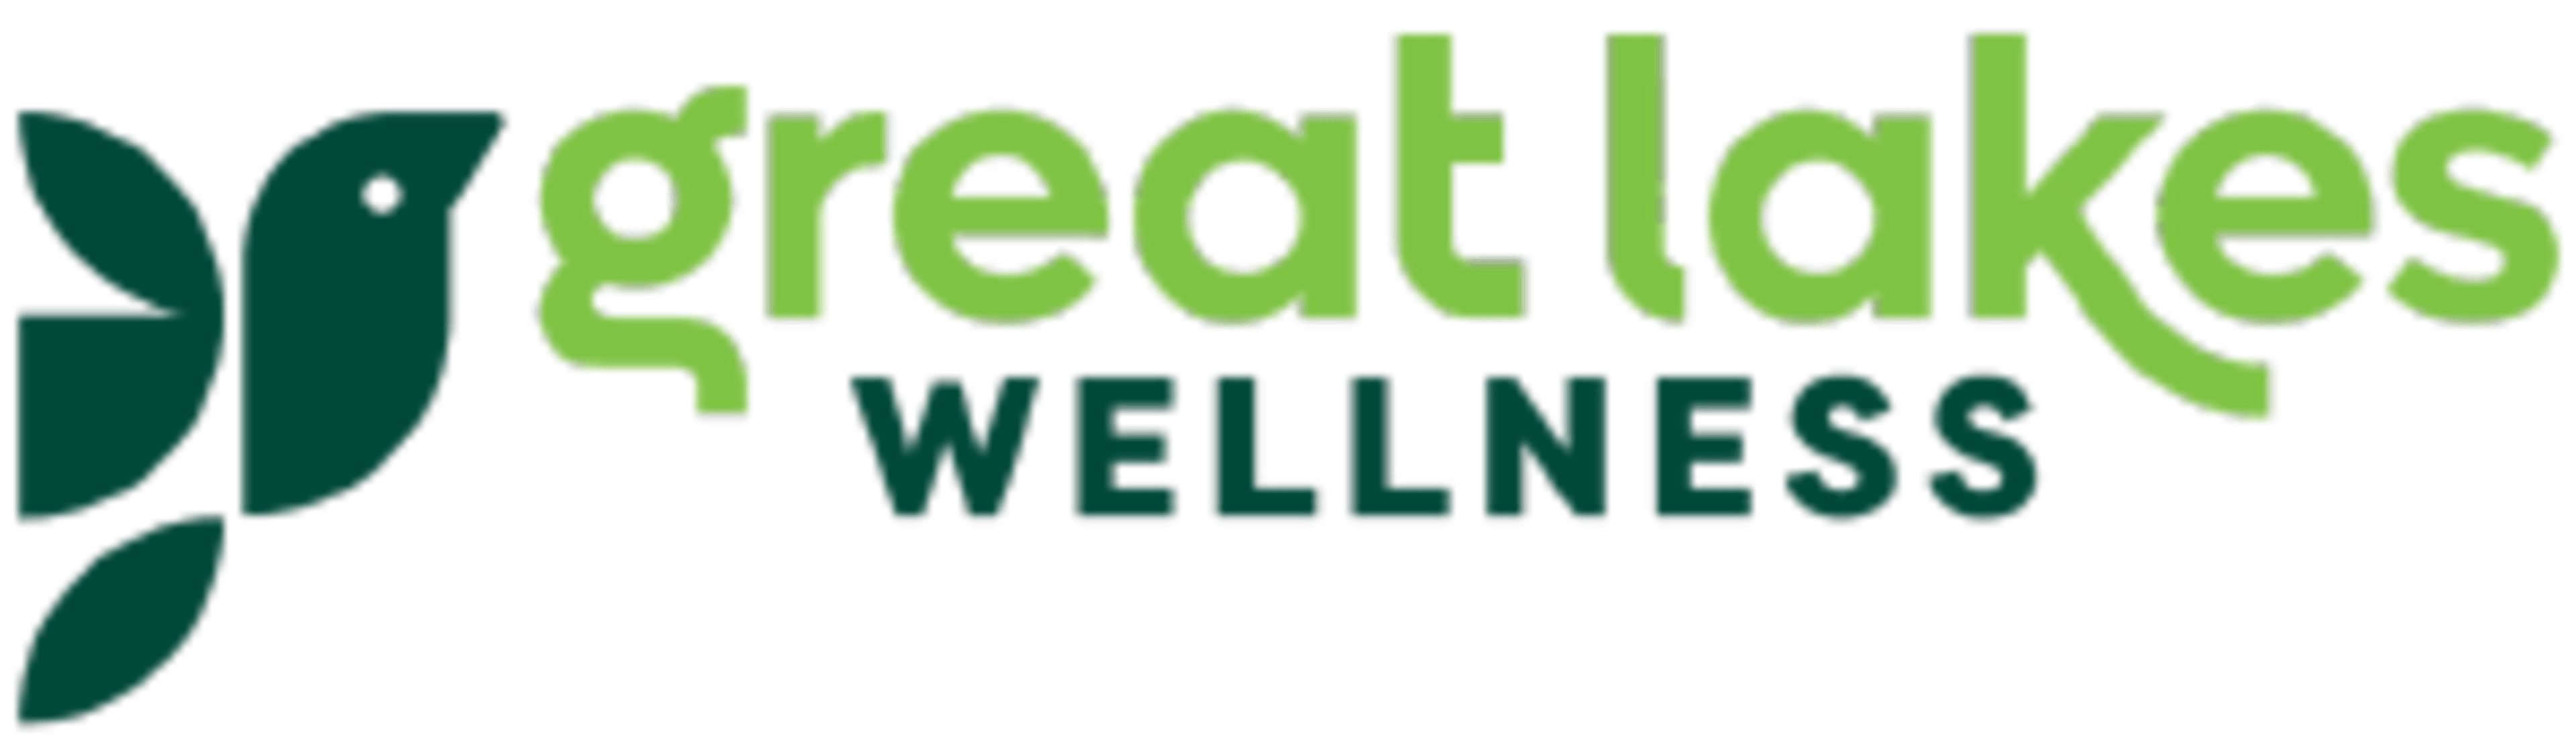 Great Lakes WellnessCode